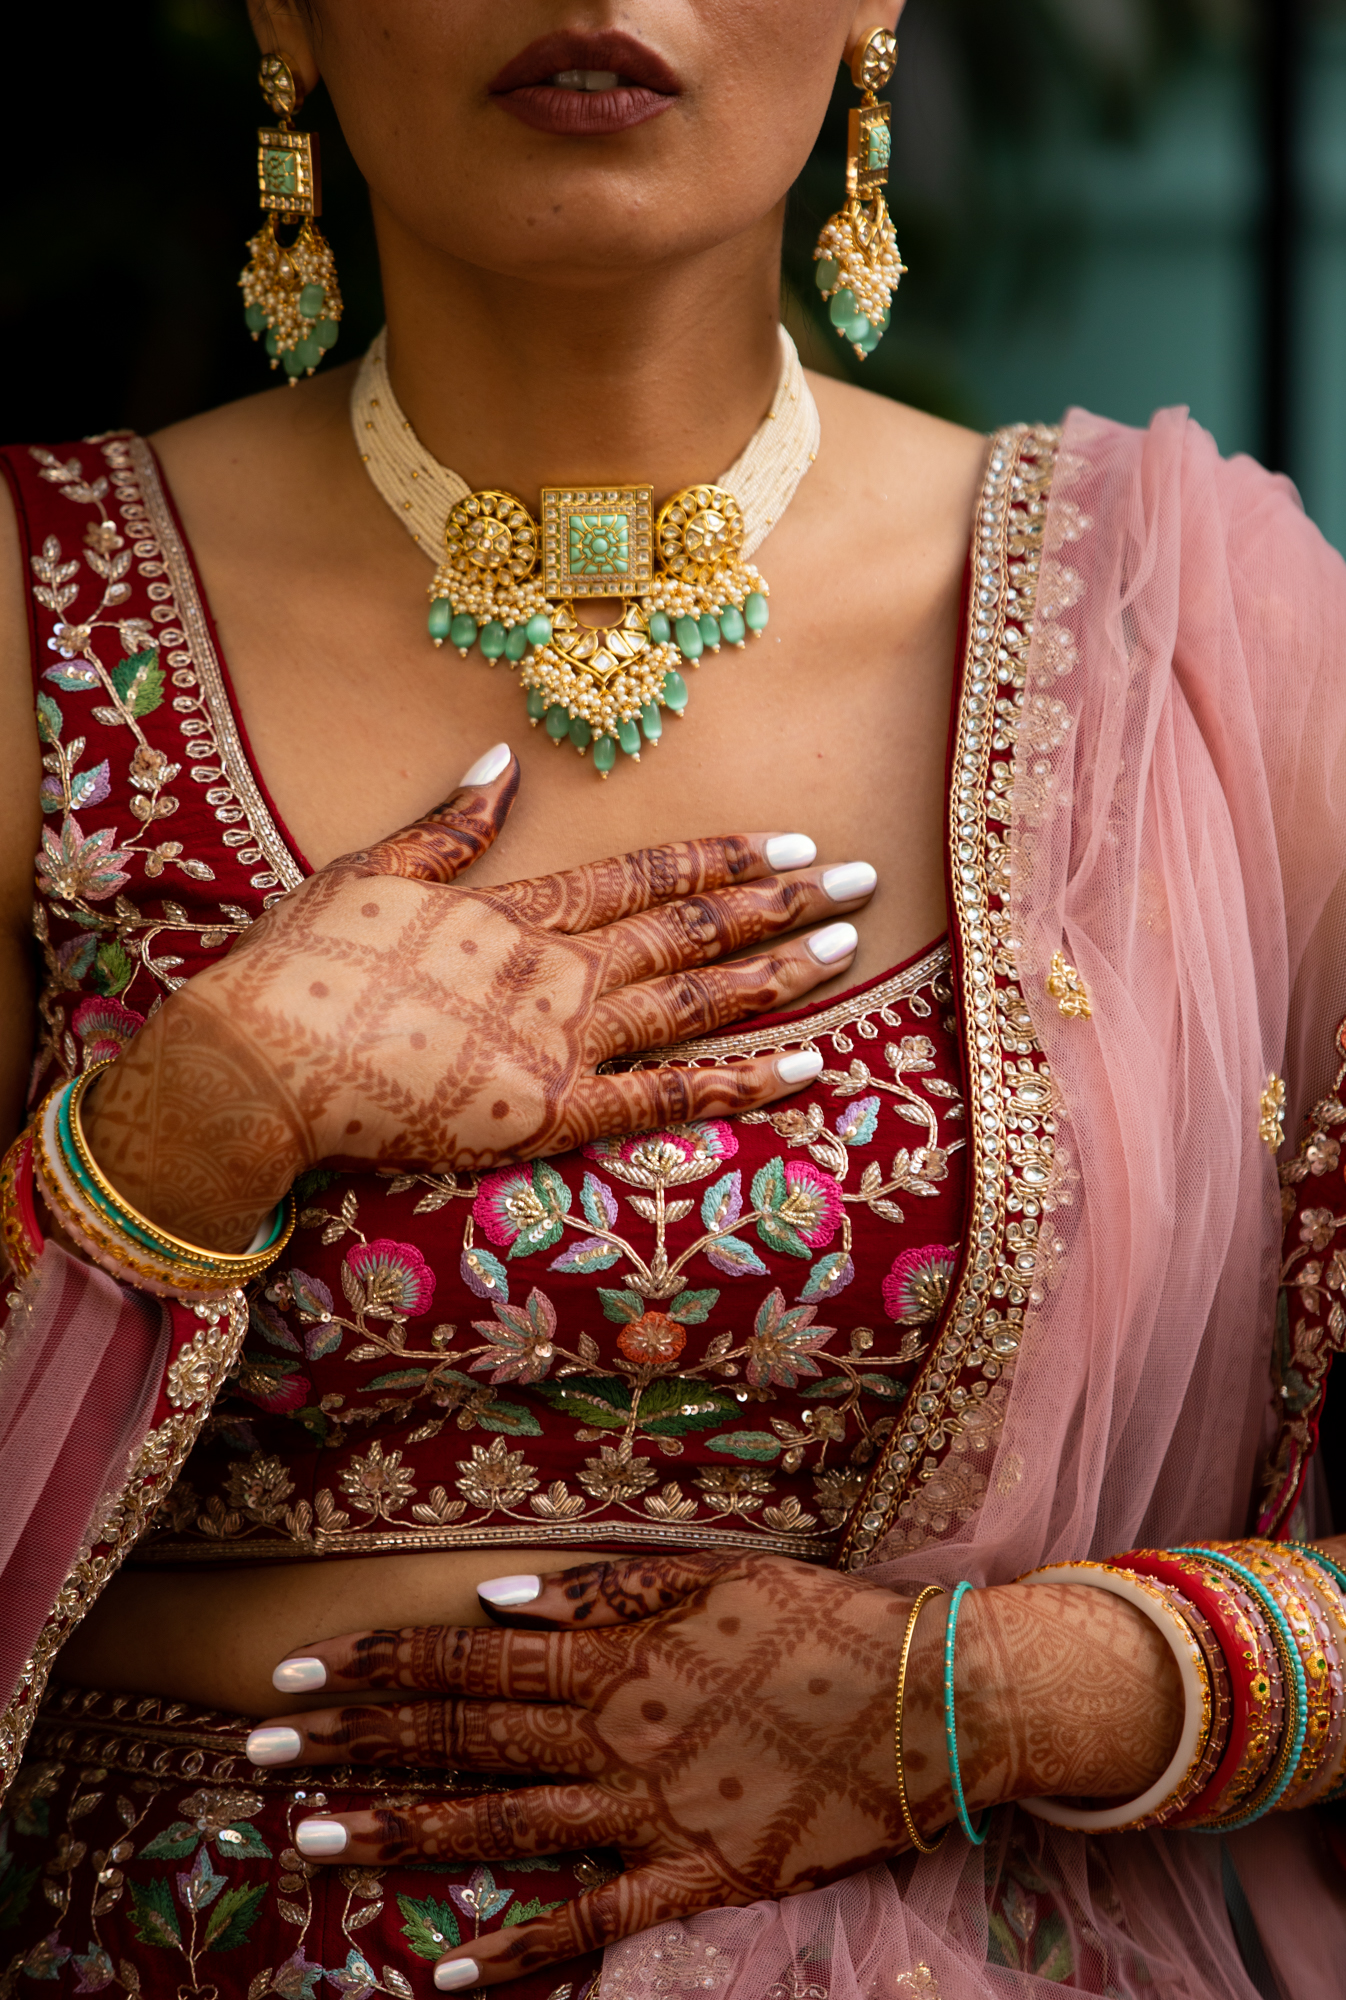 Indian bride close up details Los Angeles